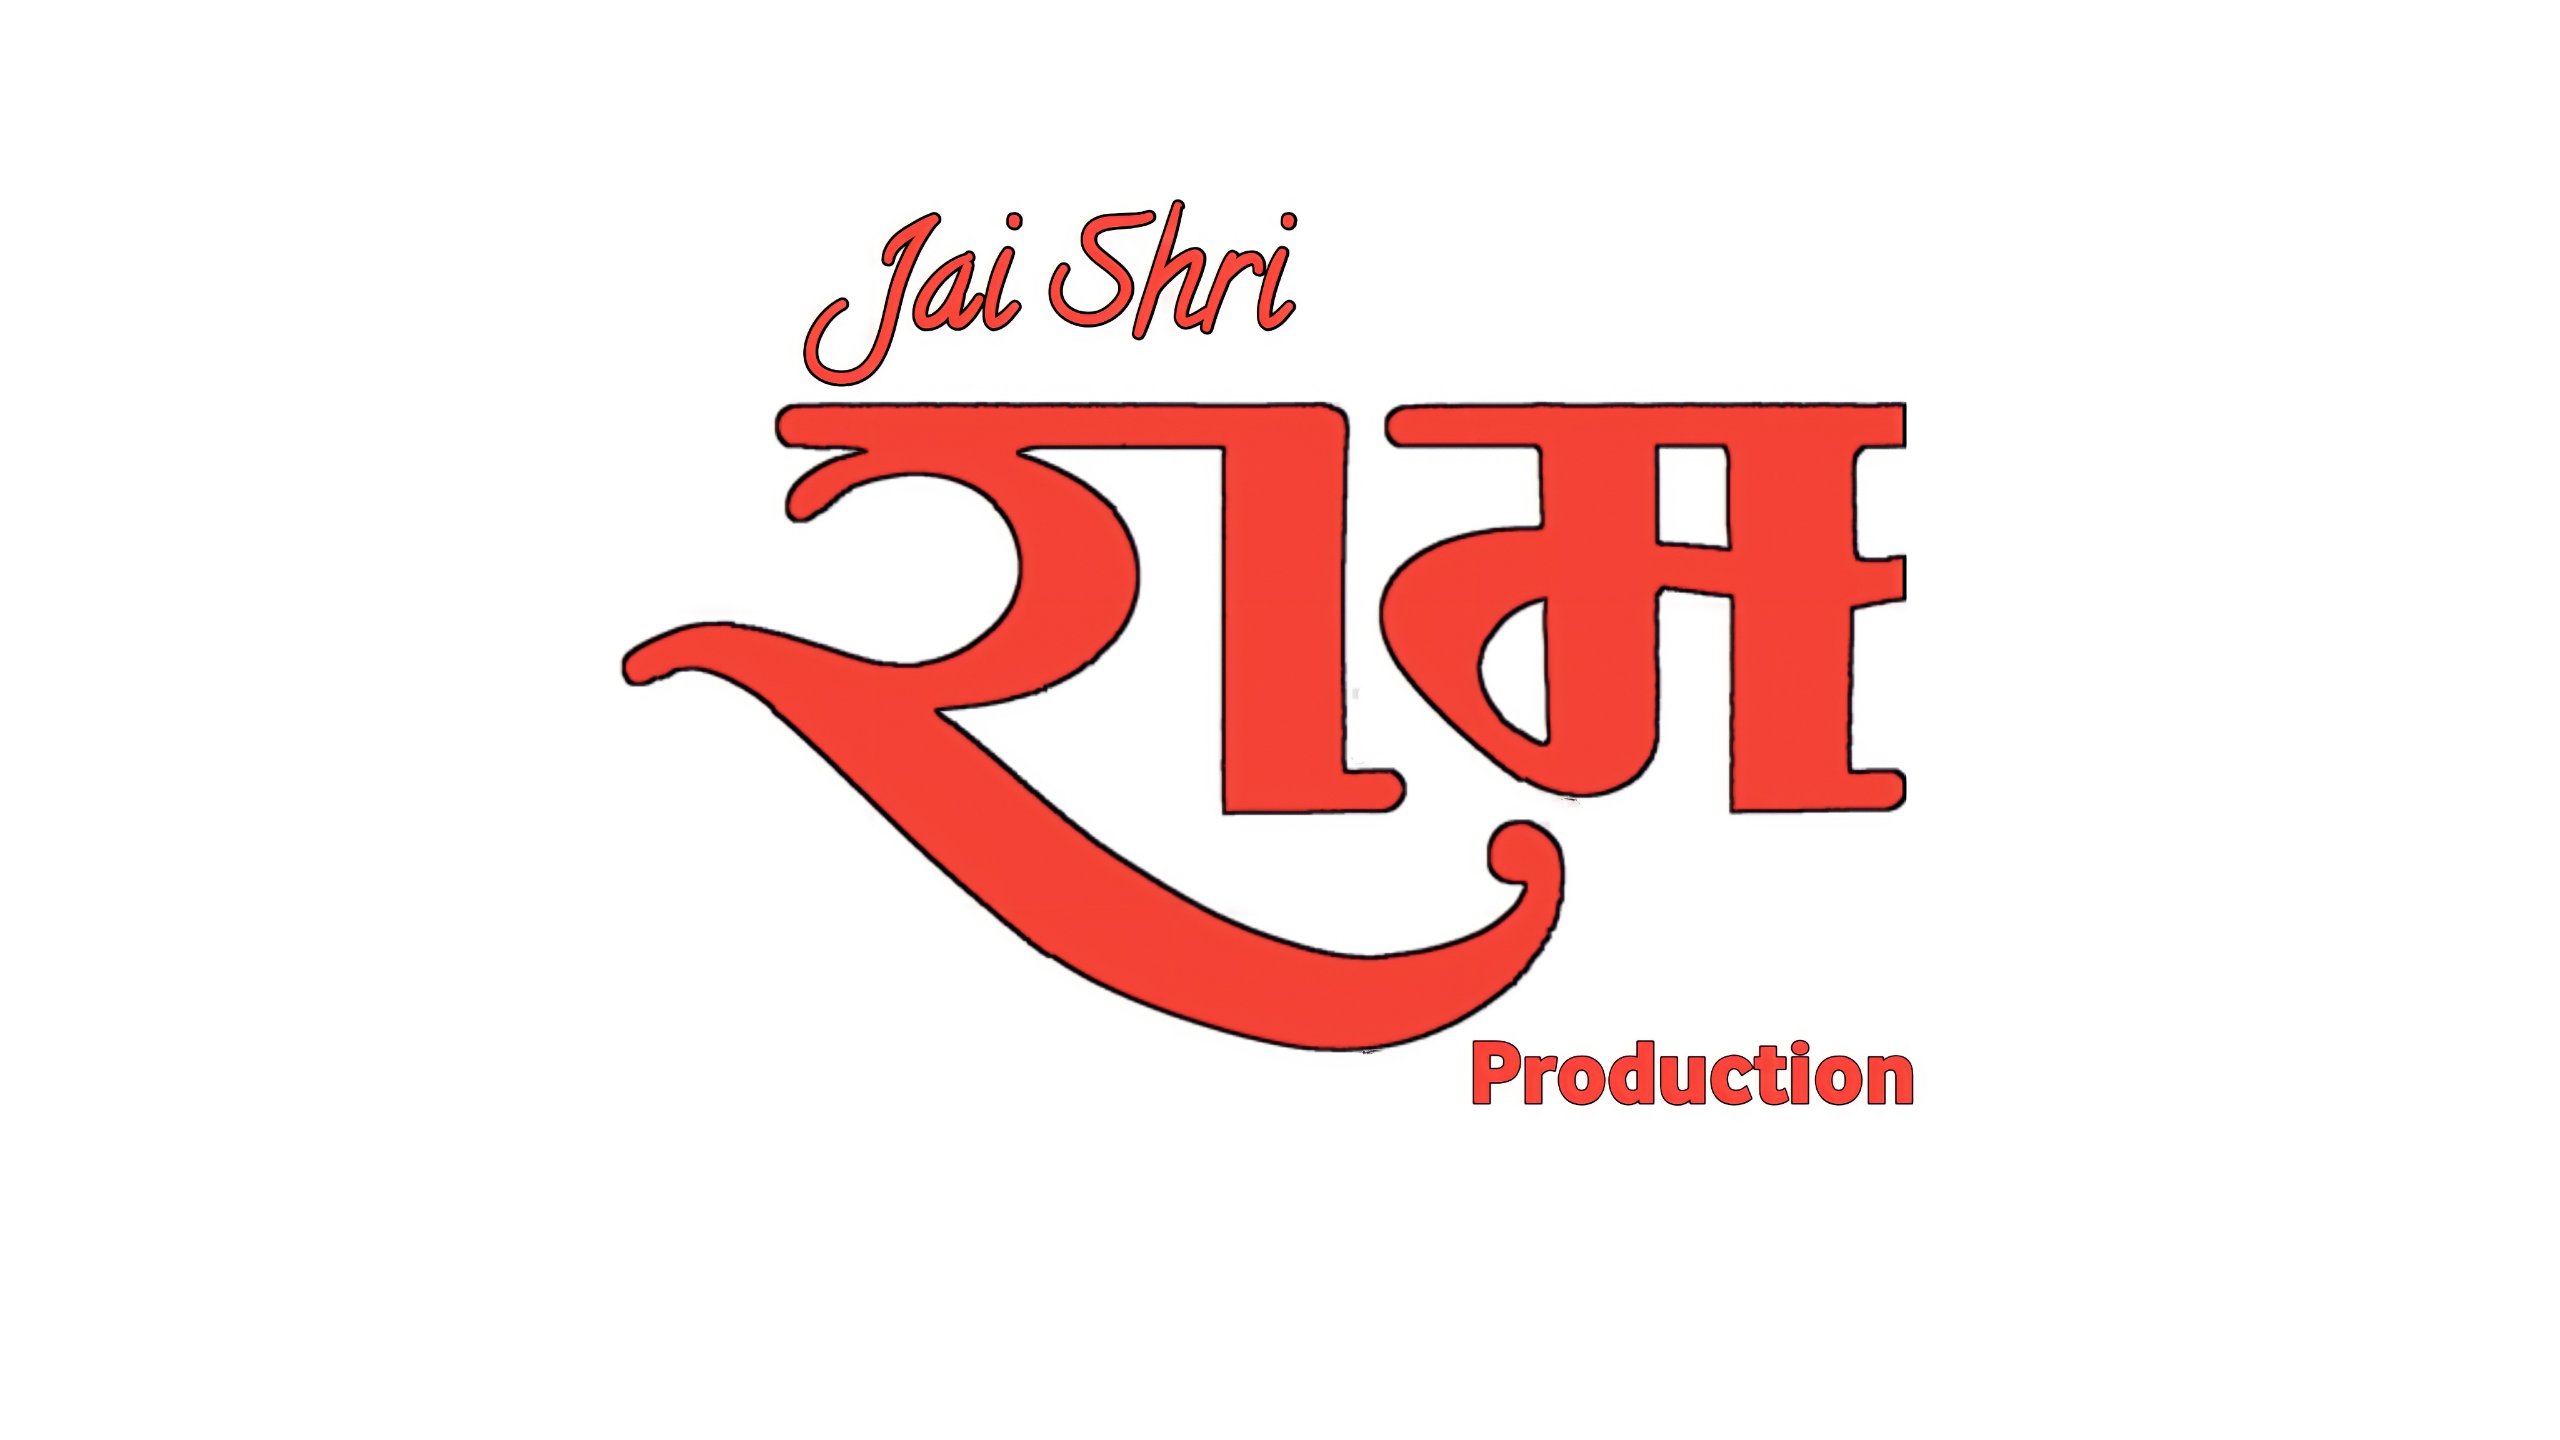 Jai Shree ram ♥️ | Ram image, Ram photos, Shree ram images